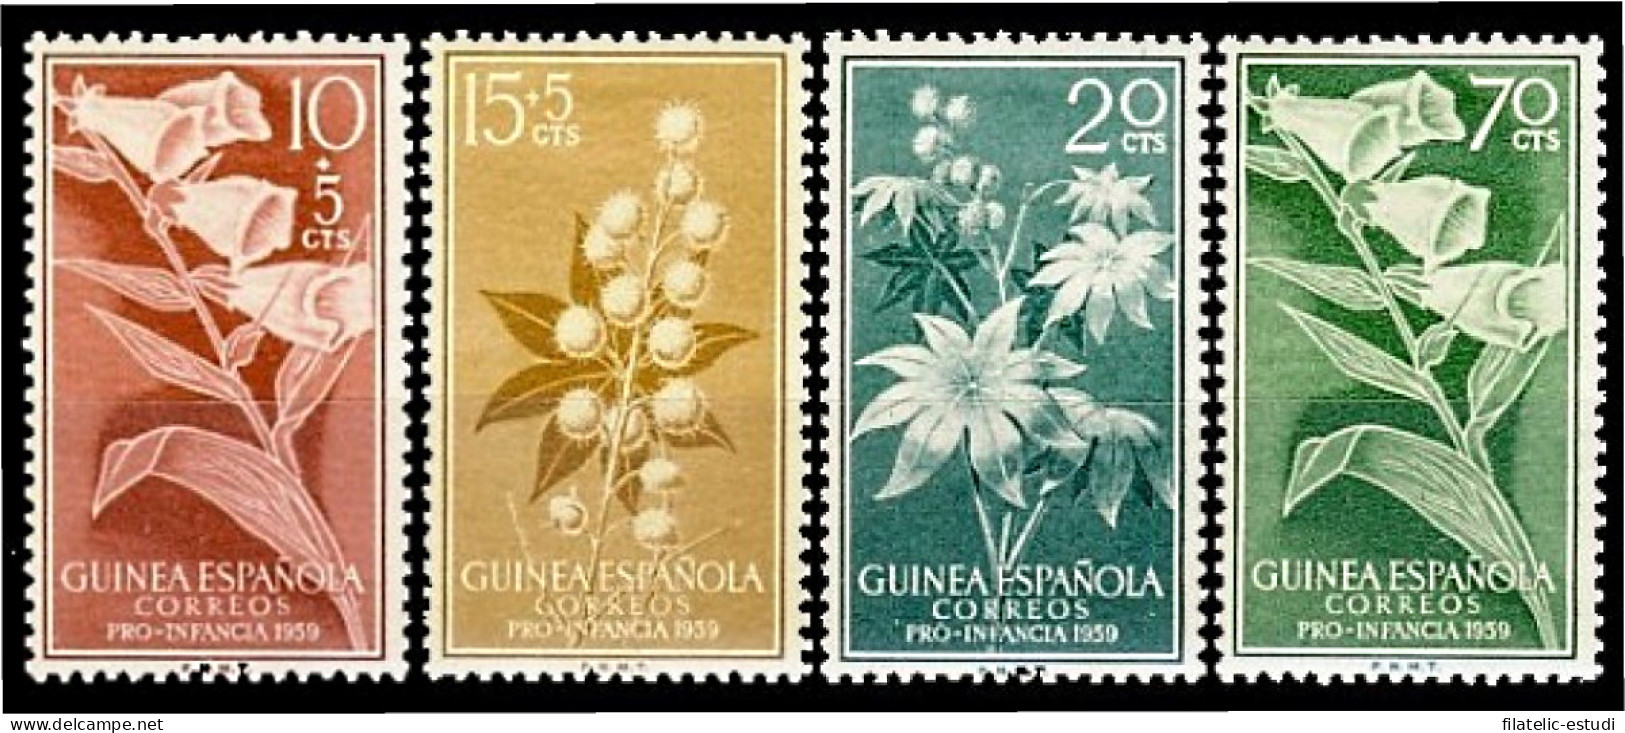 Guinea Española 391/94 1959 Pro Infancia Flora MNH - Guinea Española